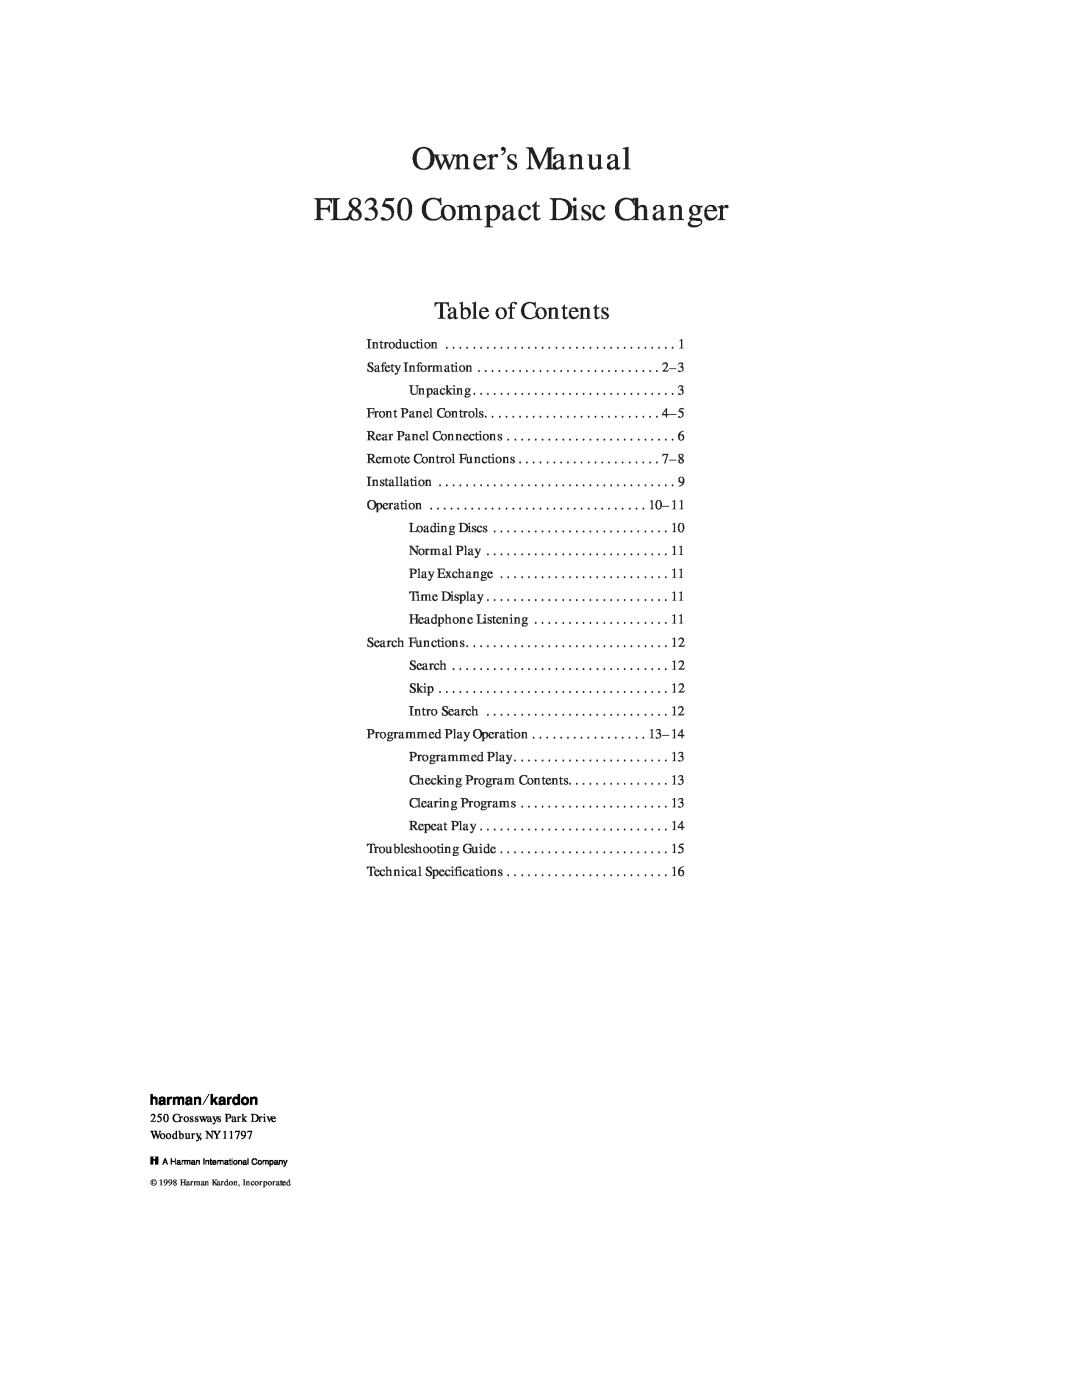 Harman-Kardon FL8350 owner manual Table of Contents 